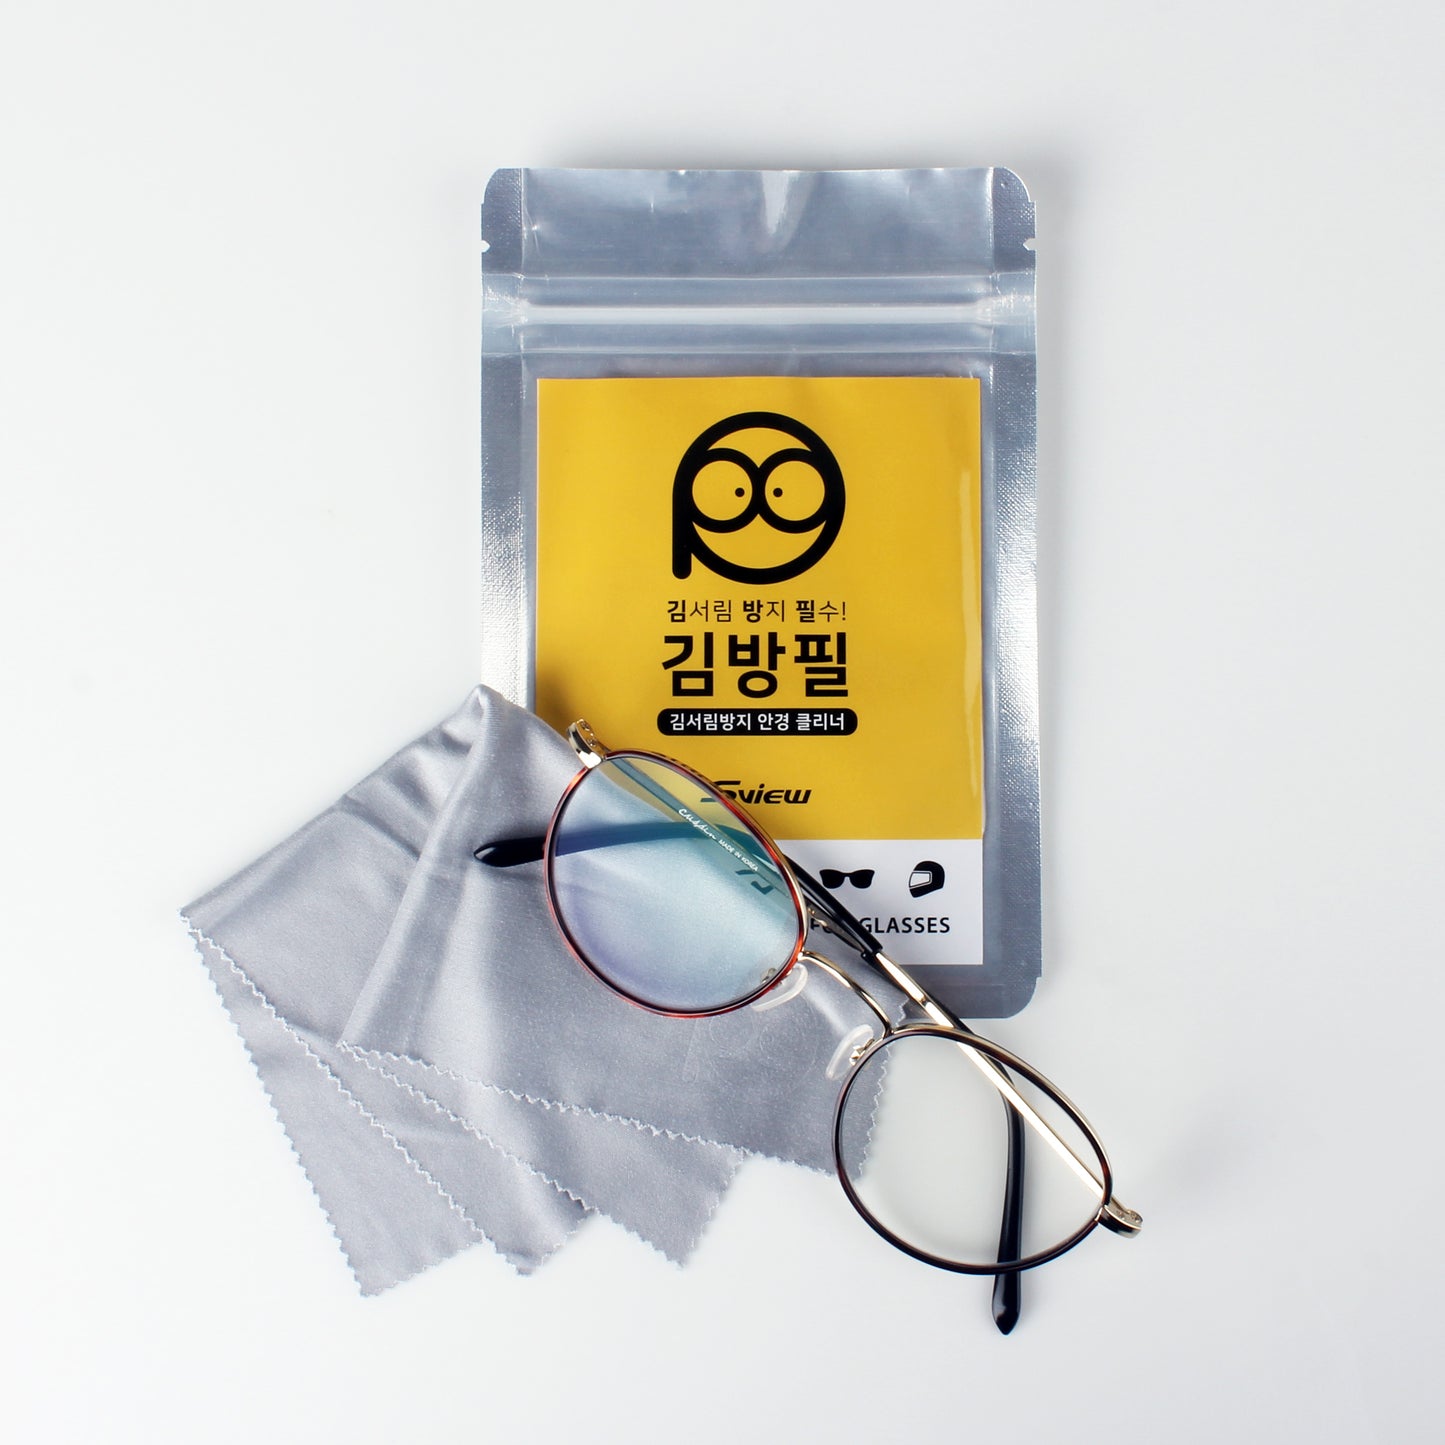 Sview Anti-Fog Microfiber for Glasses - 防霧眼鏡布